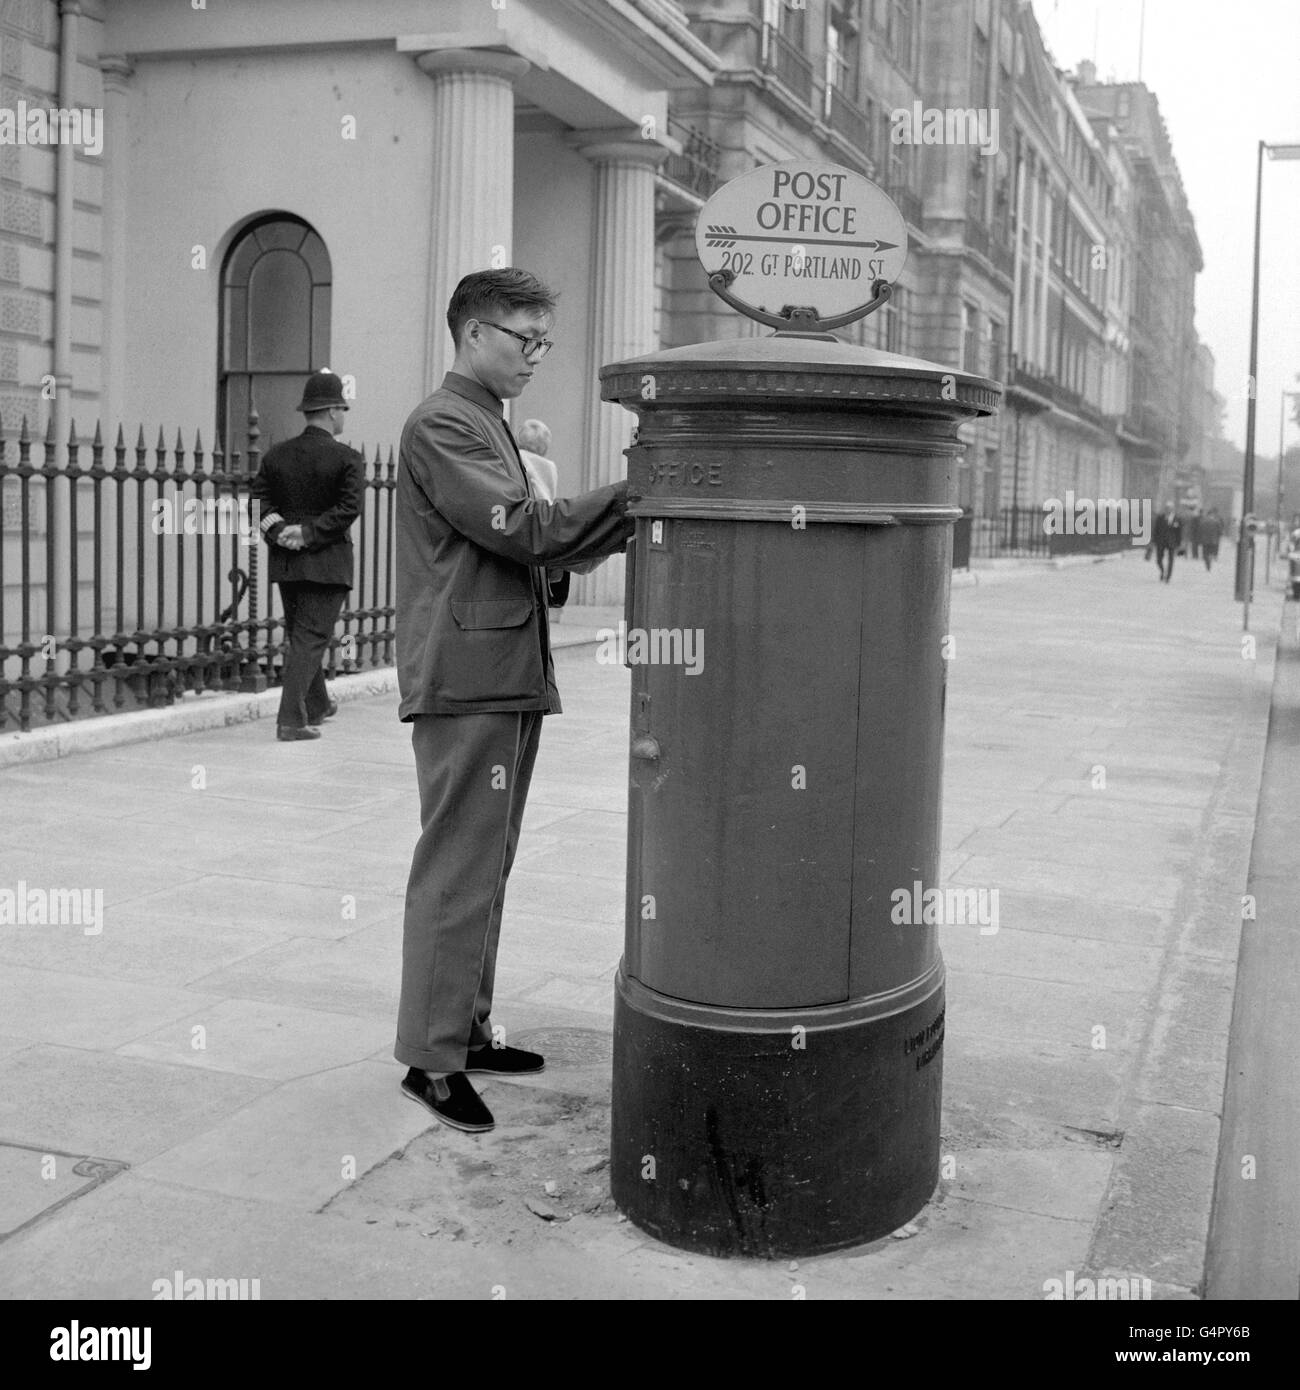 British Postal Service - Letter Posting - London Stock Photo